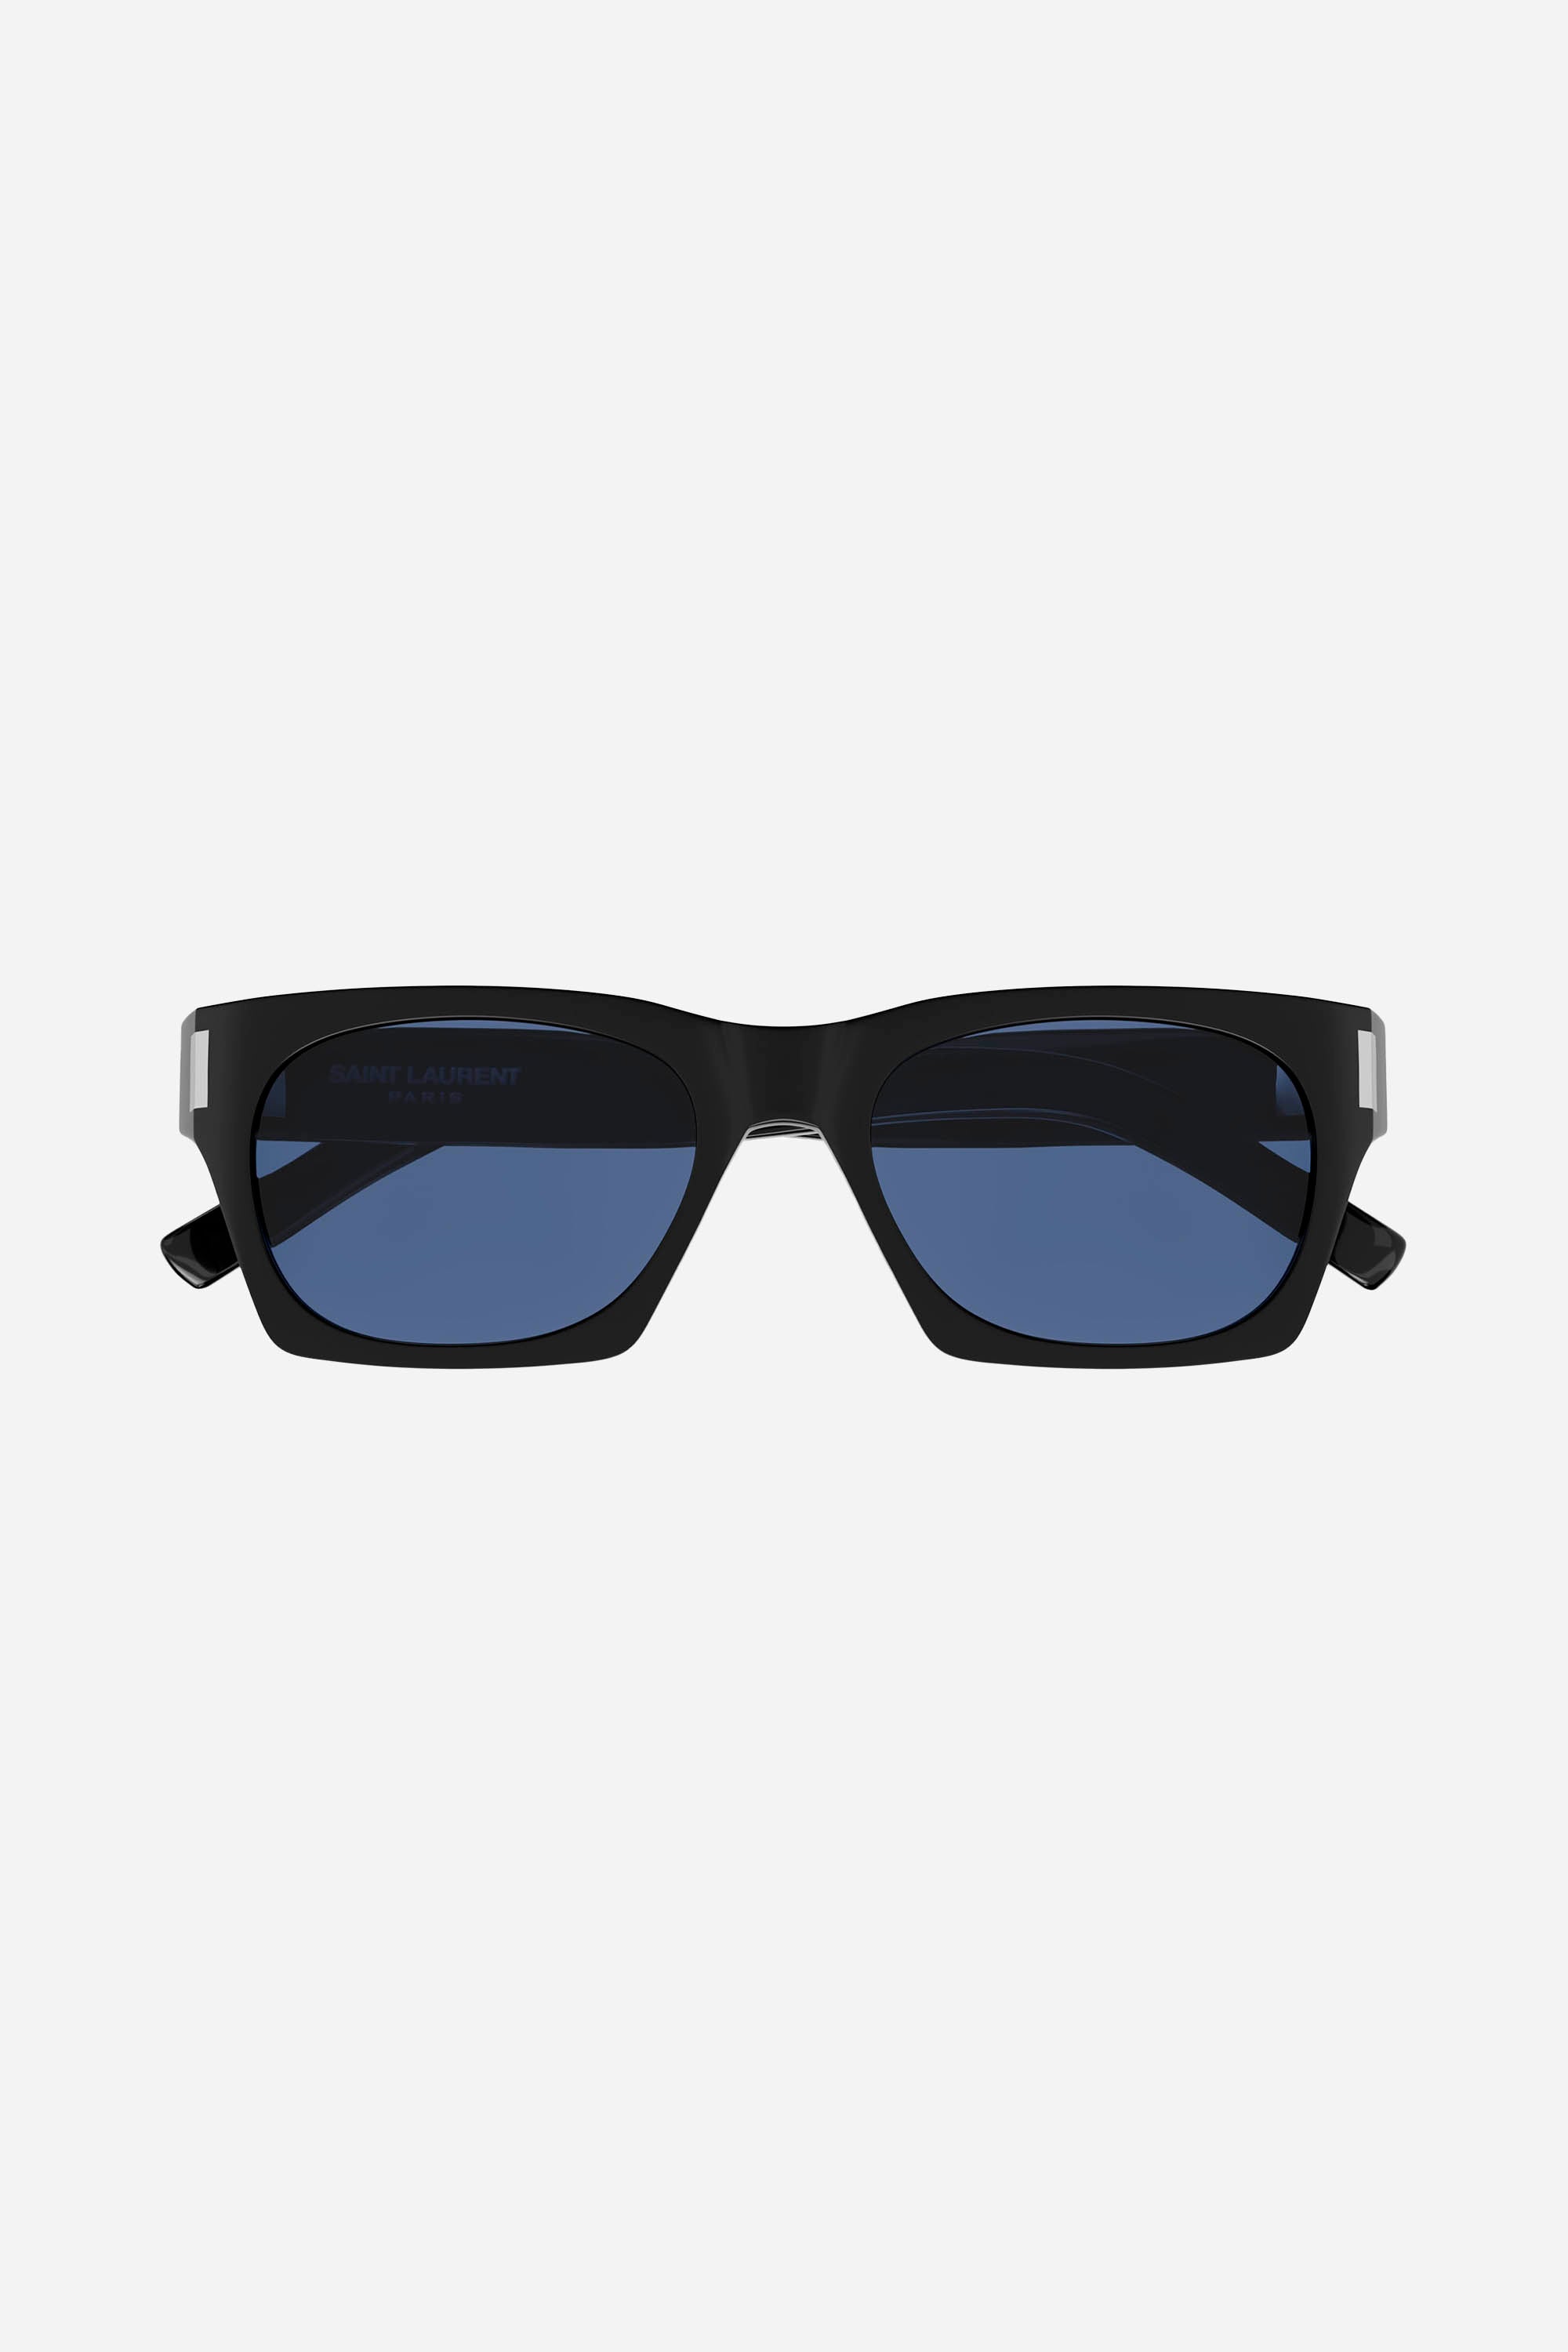 Saint Laurent rectangular sharp black and blue sunglasses - Eyewear Club